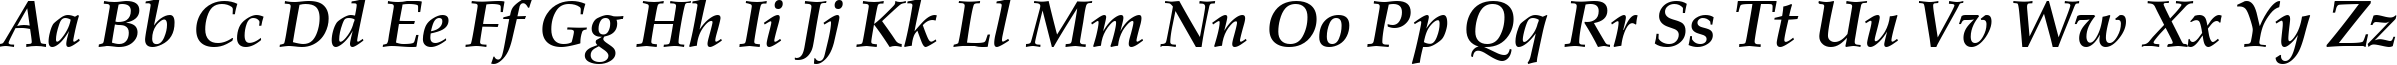 Пример написания английского алфавита шрифтом Palladius  Bold Italic